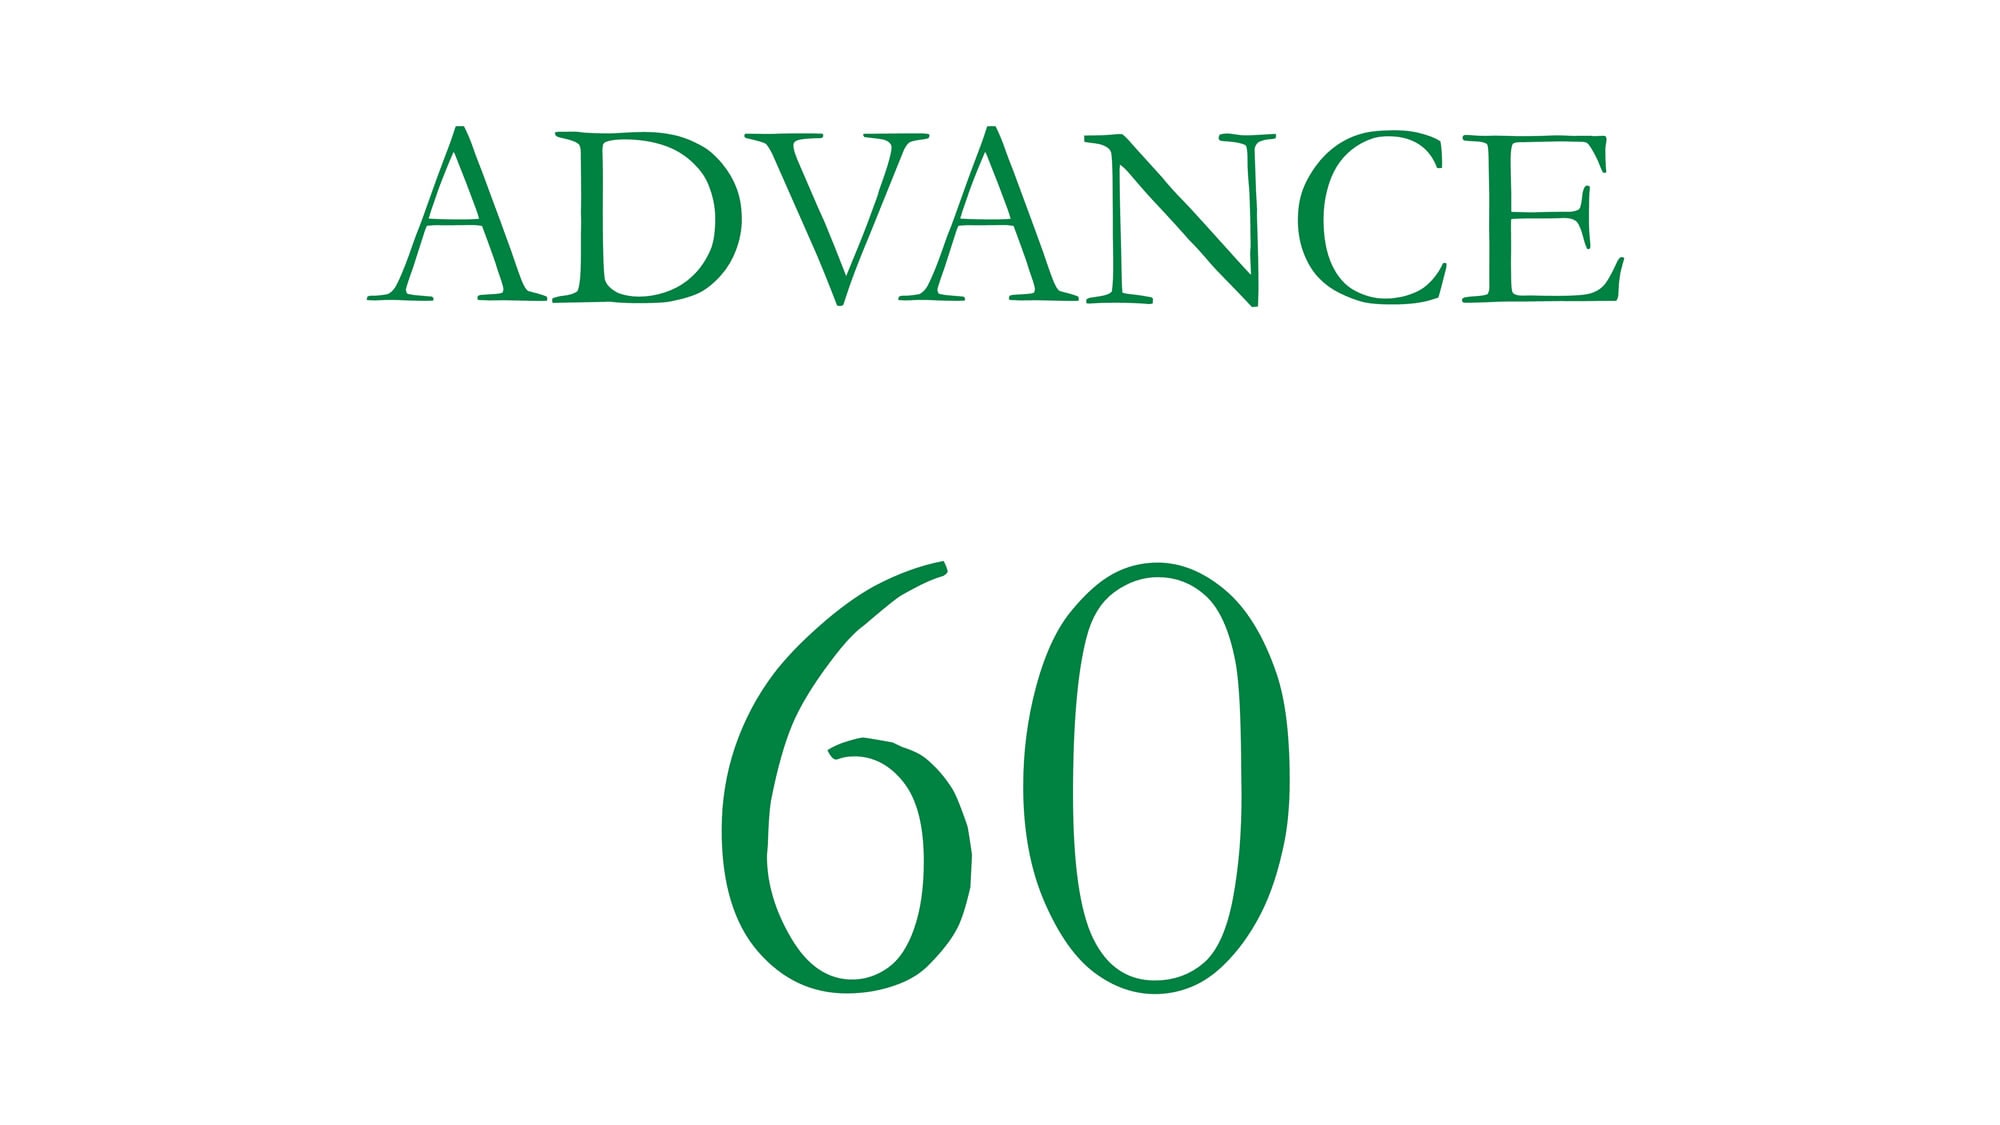 ADVANCE60